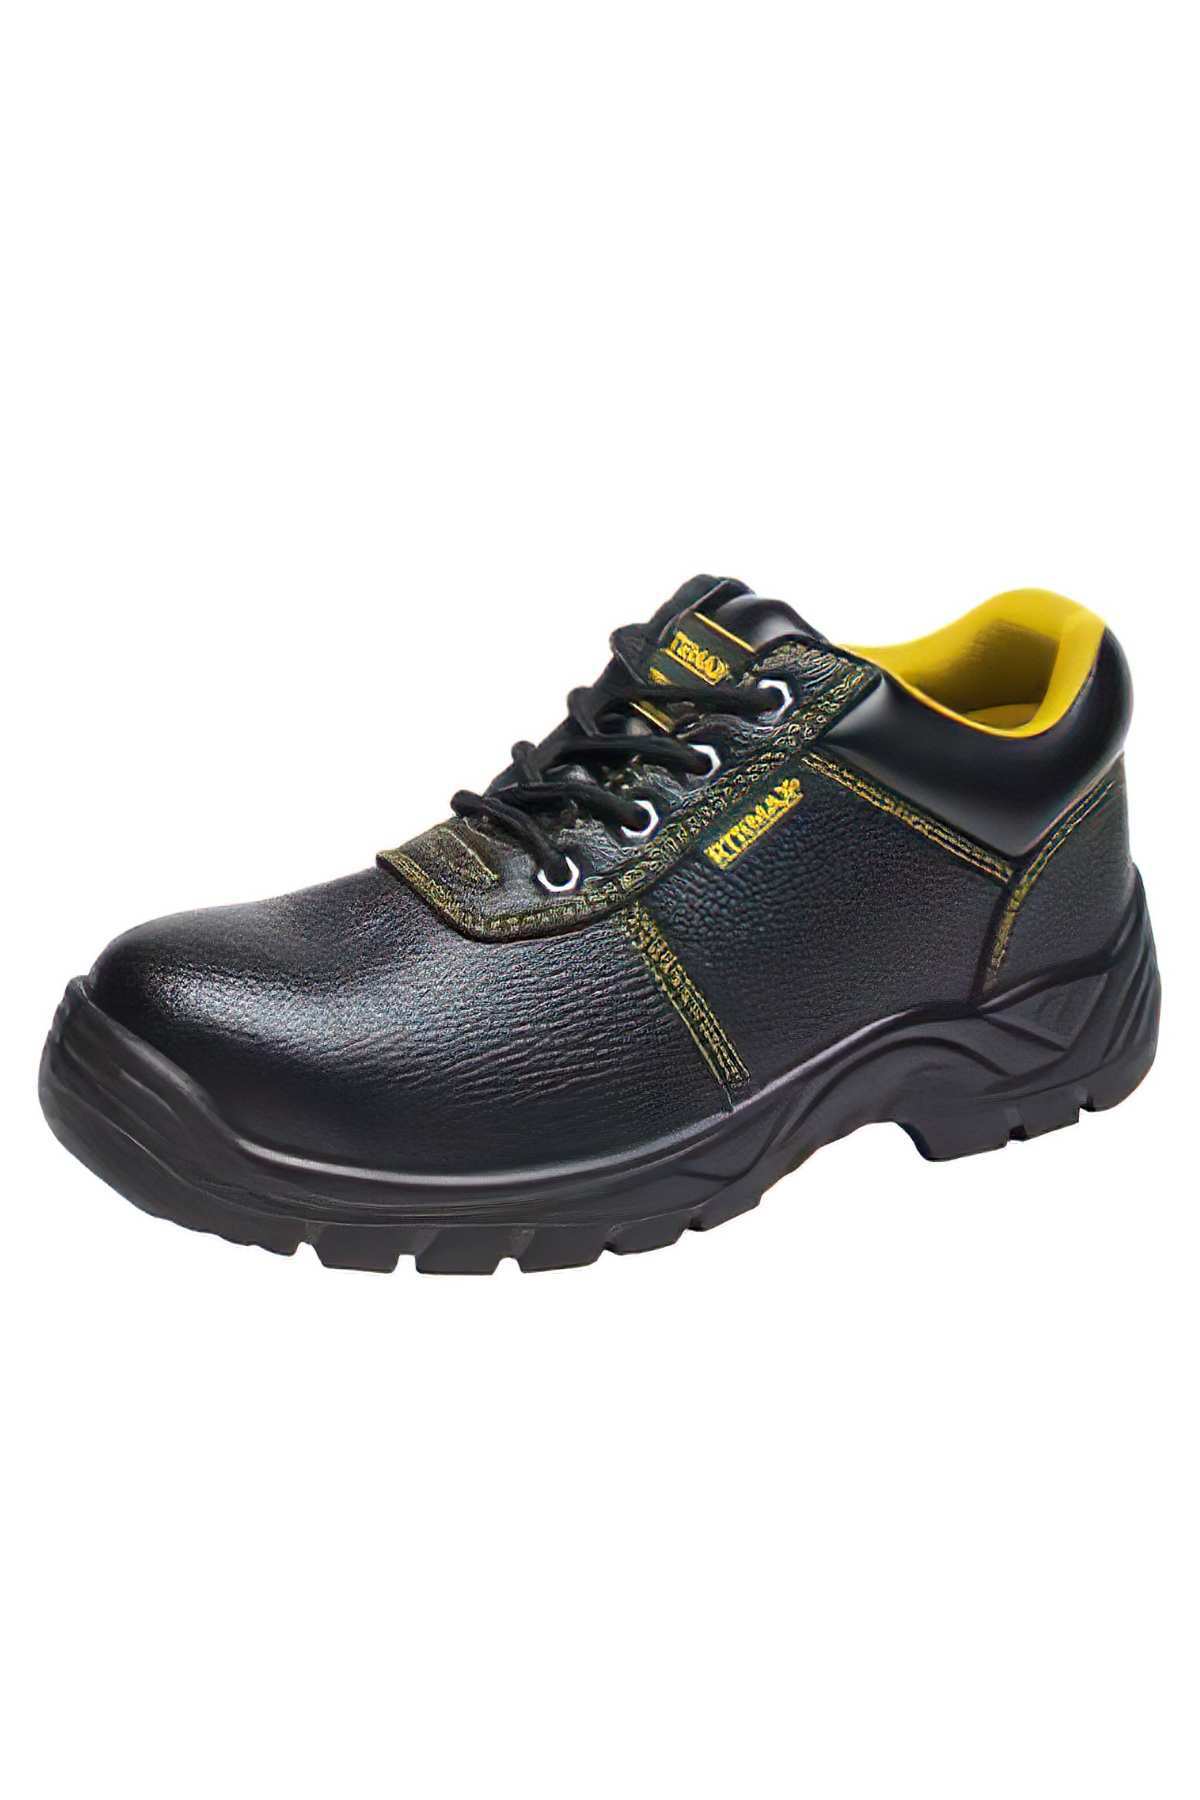 RTRMAX RHS2640 Güvenlik Ayakkabısı